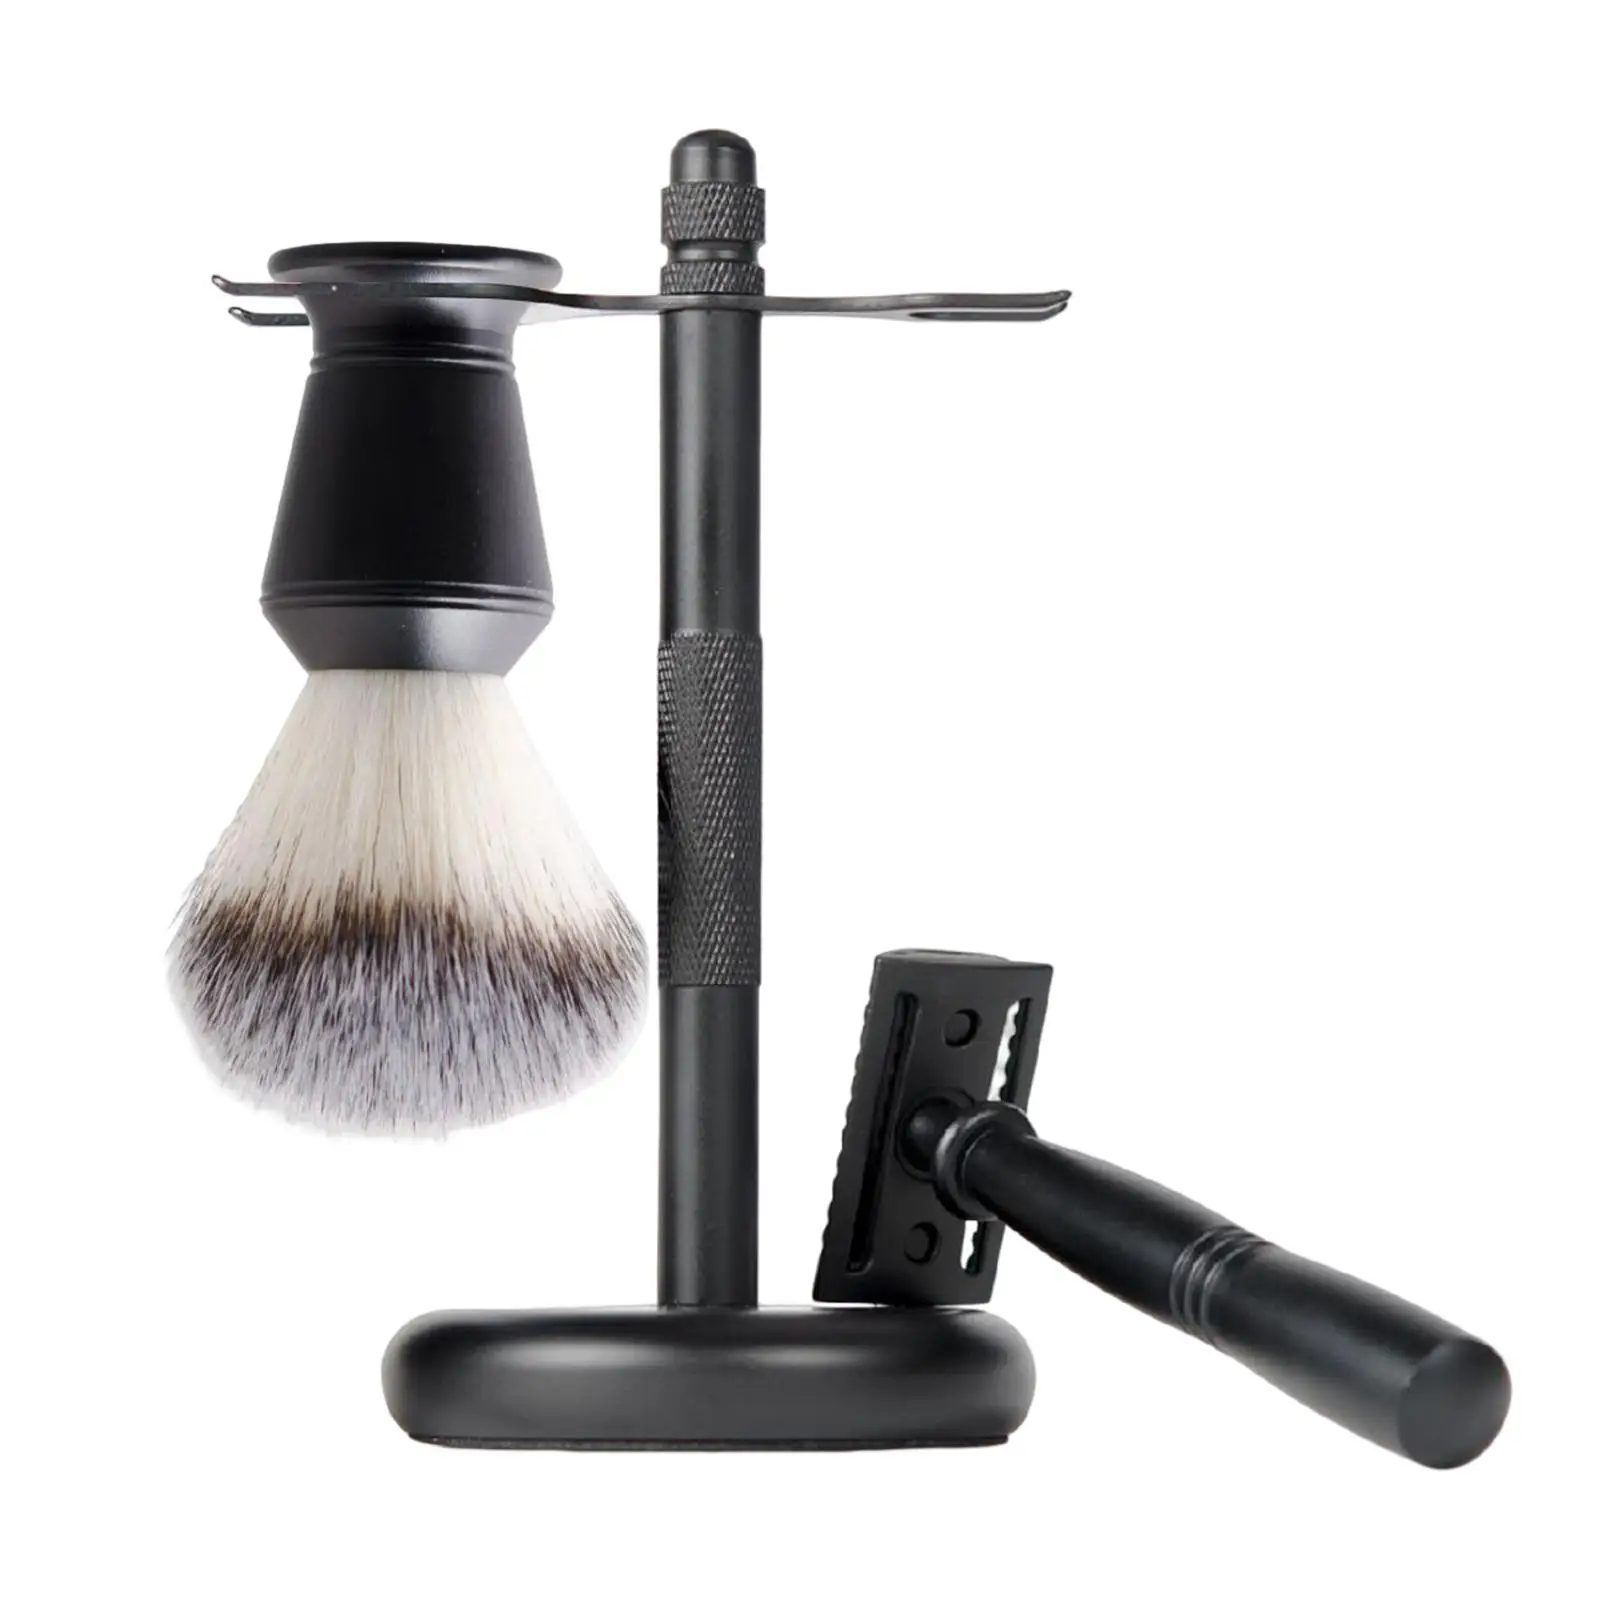 3 Pieces Shaving Set Black Color Razor Shaving Kit Includes Edge Razor, Holder, Shaving Brush Gift Set Luxury for Dad Boyfriend